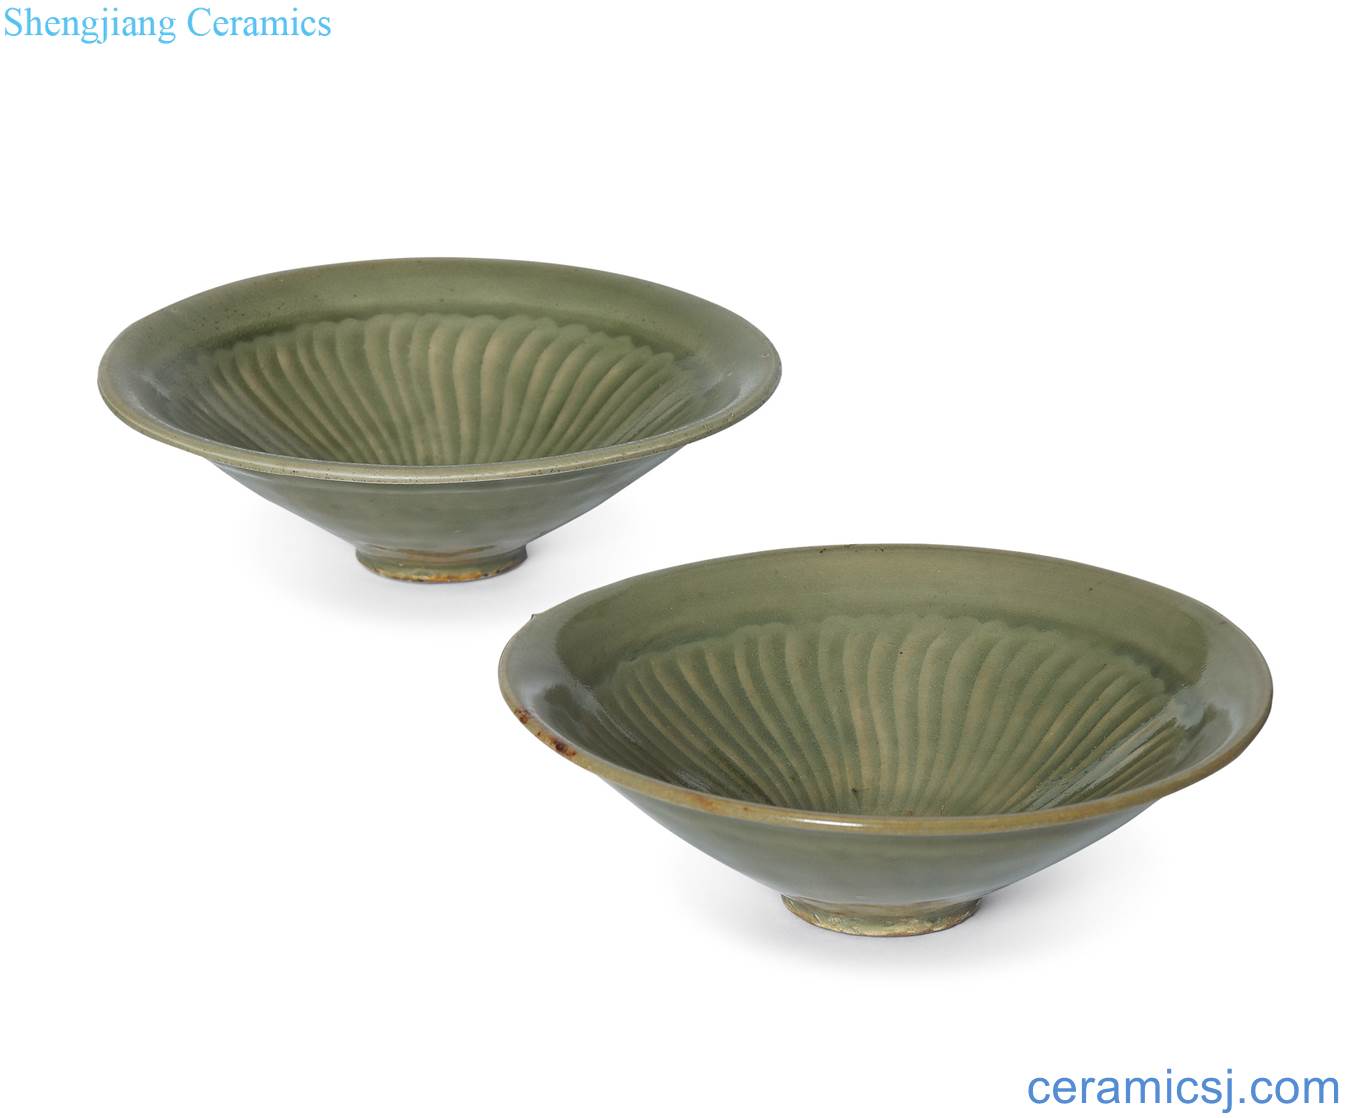 King yao state kiln radiation ripples bowl (a)